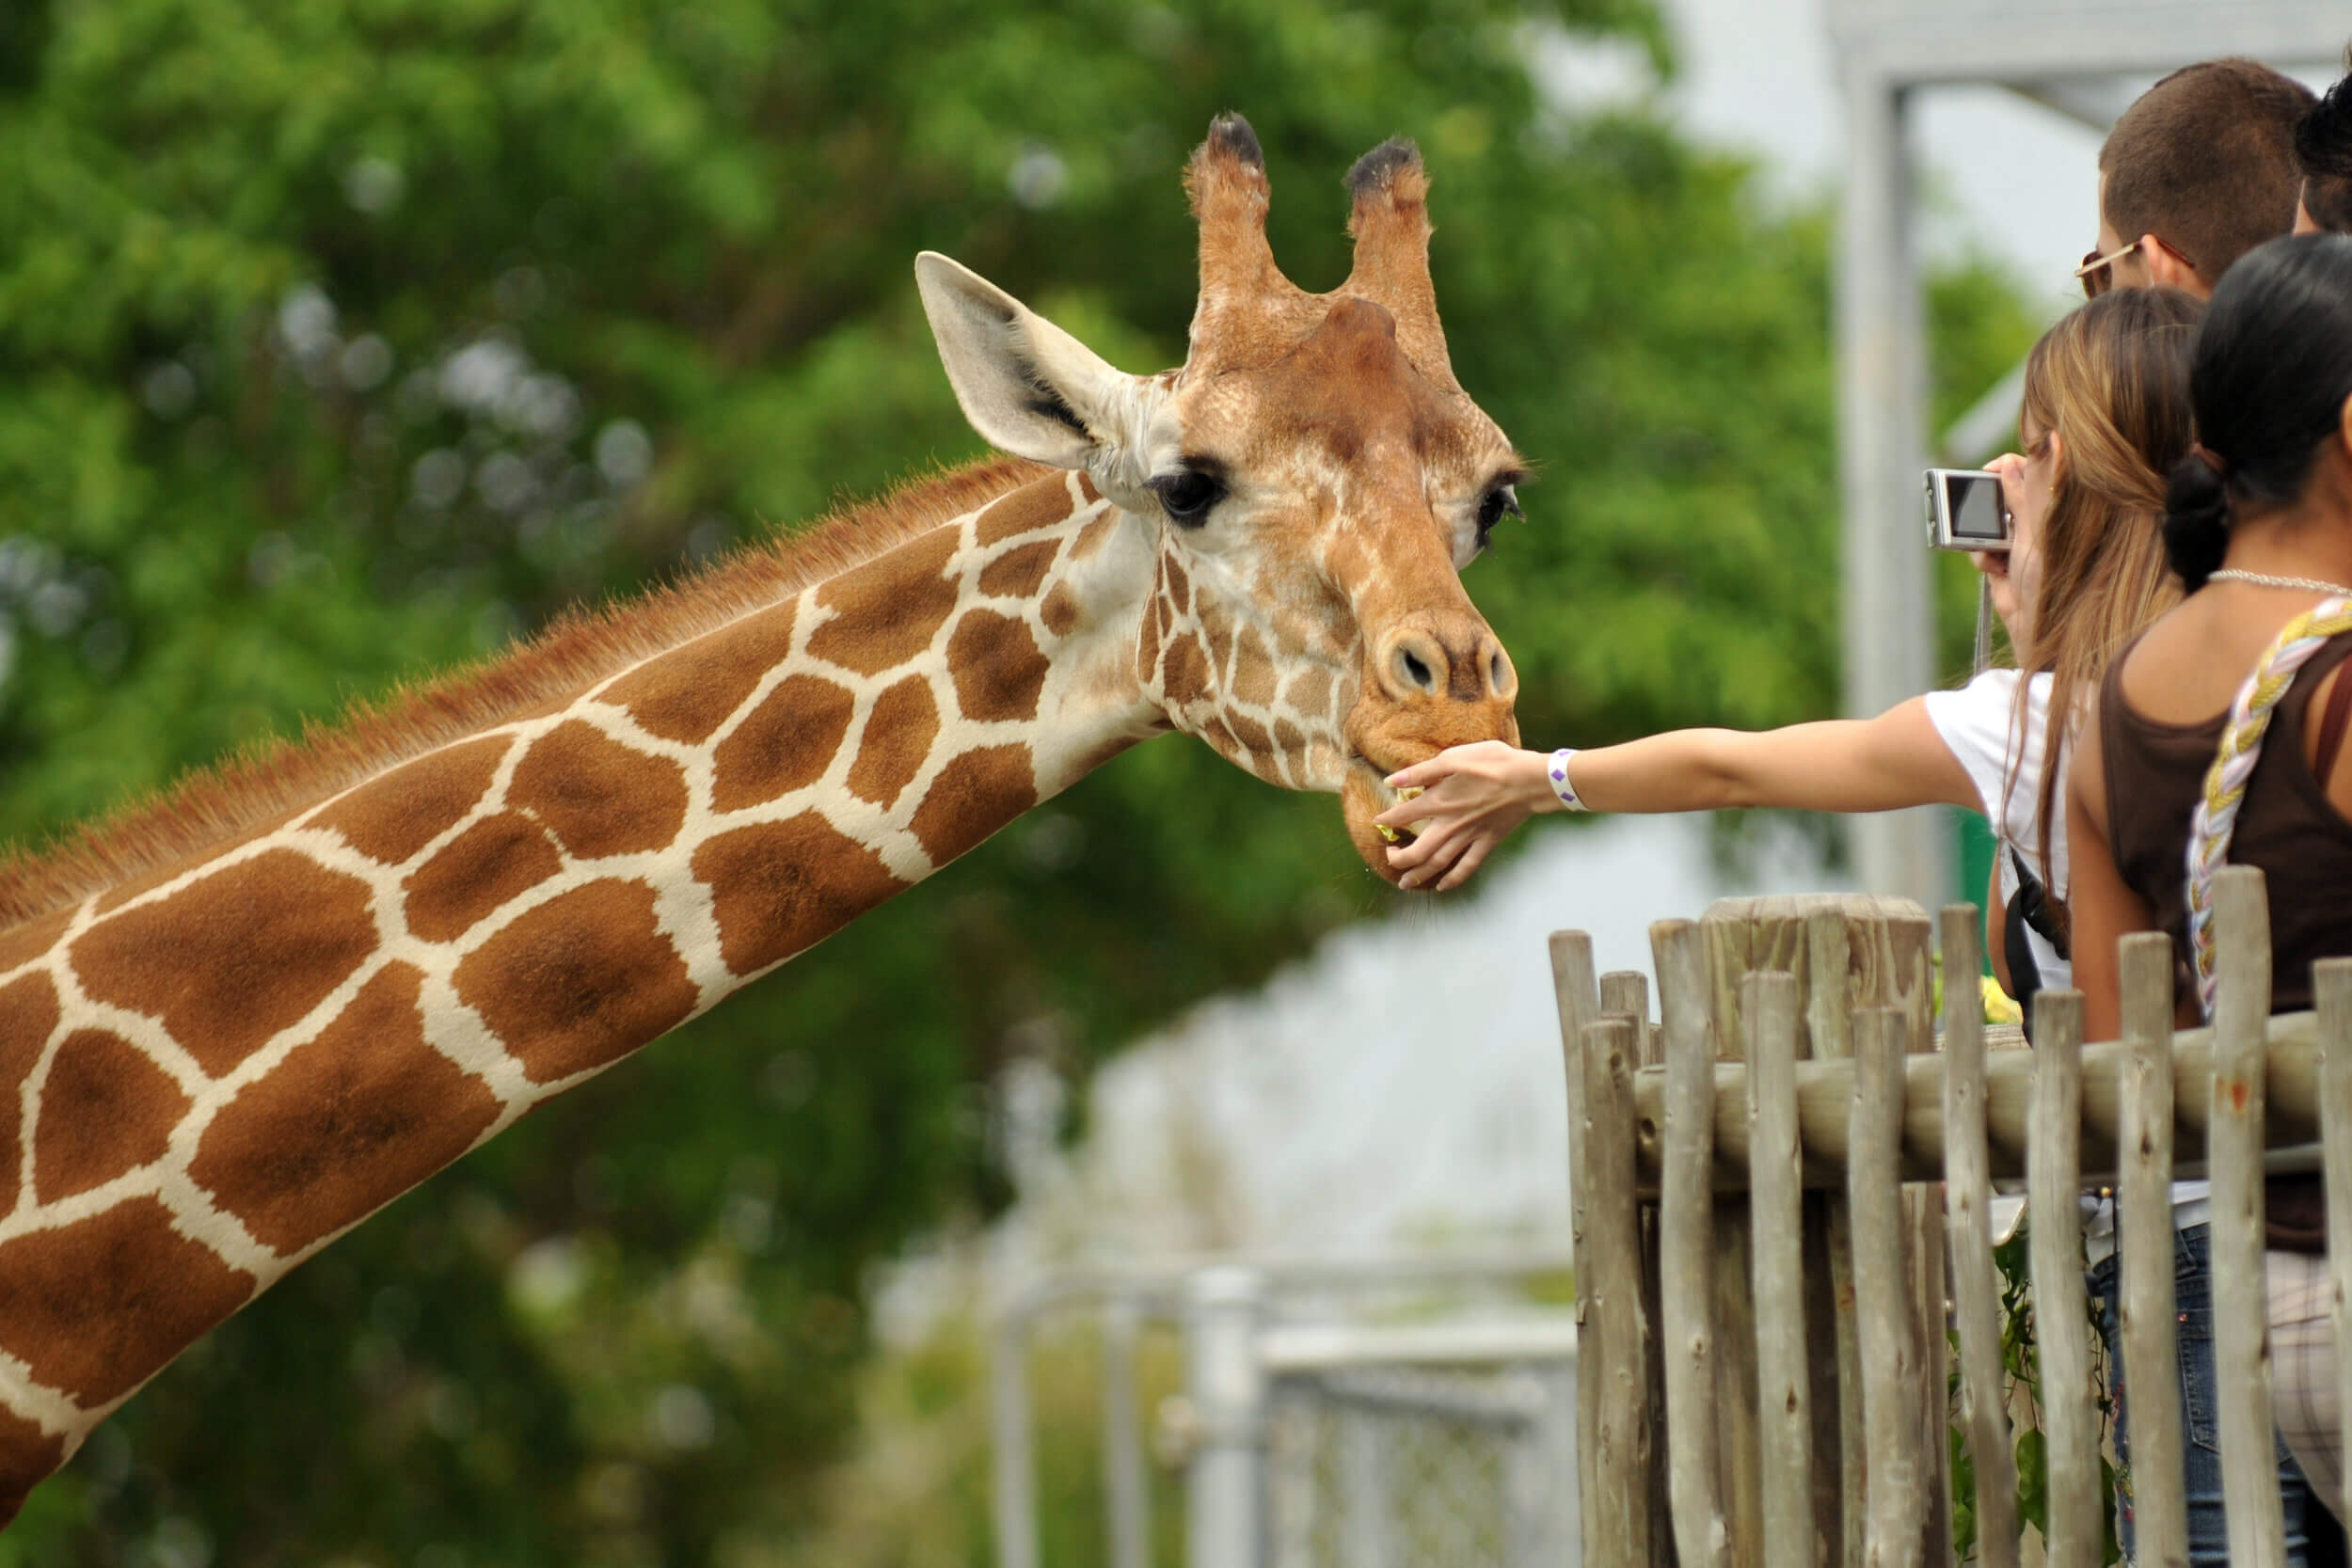 A moment you will never forget - feeding the Giraffes of the Giraffe Centre in Nairobi, Kenya